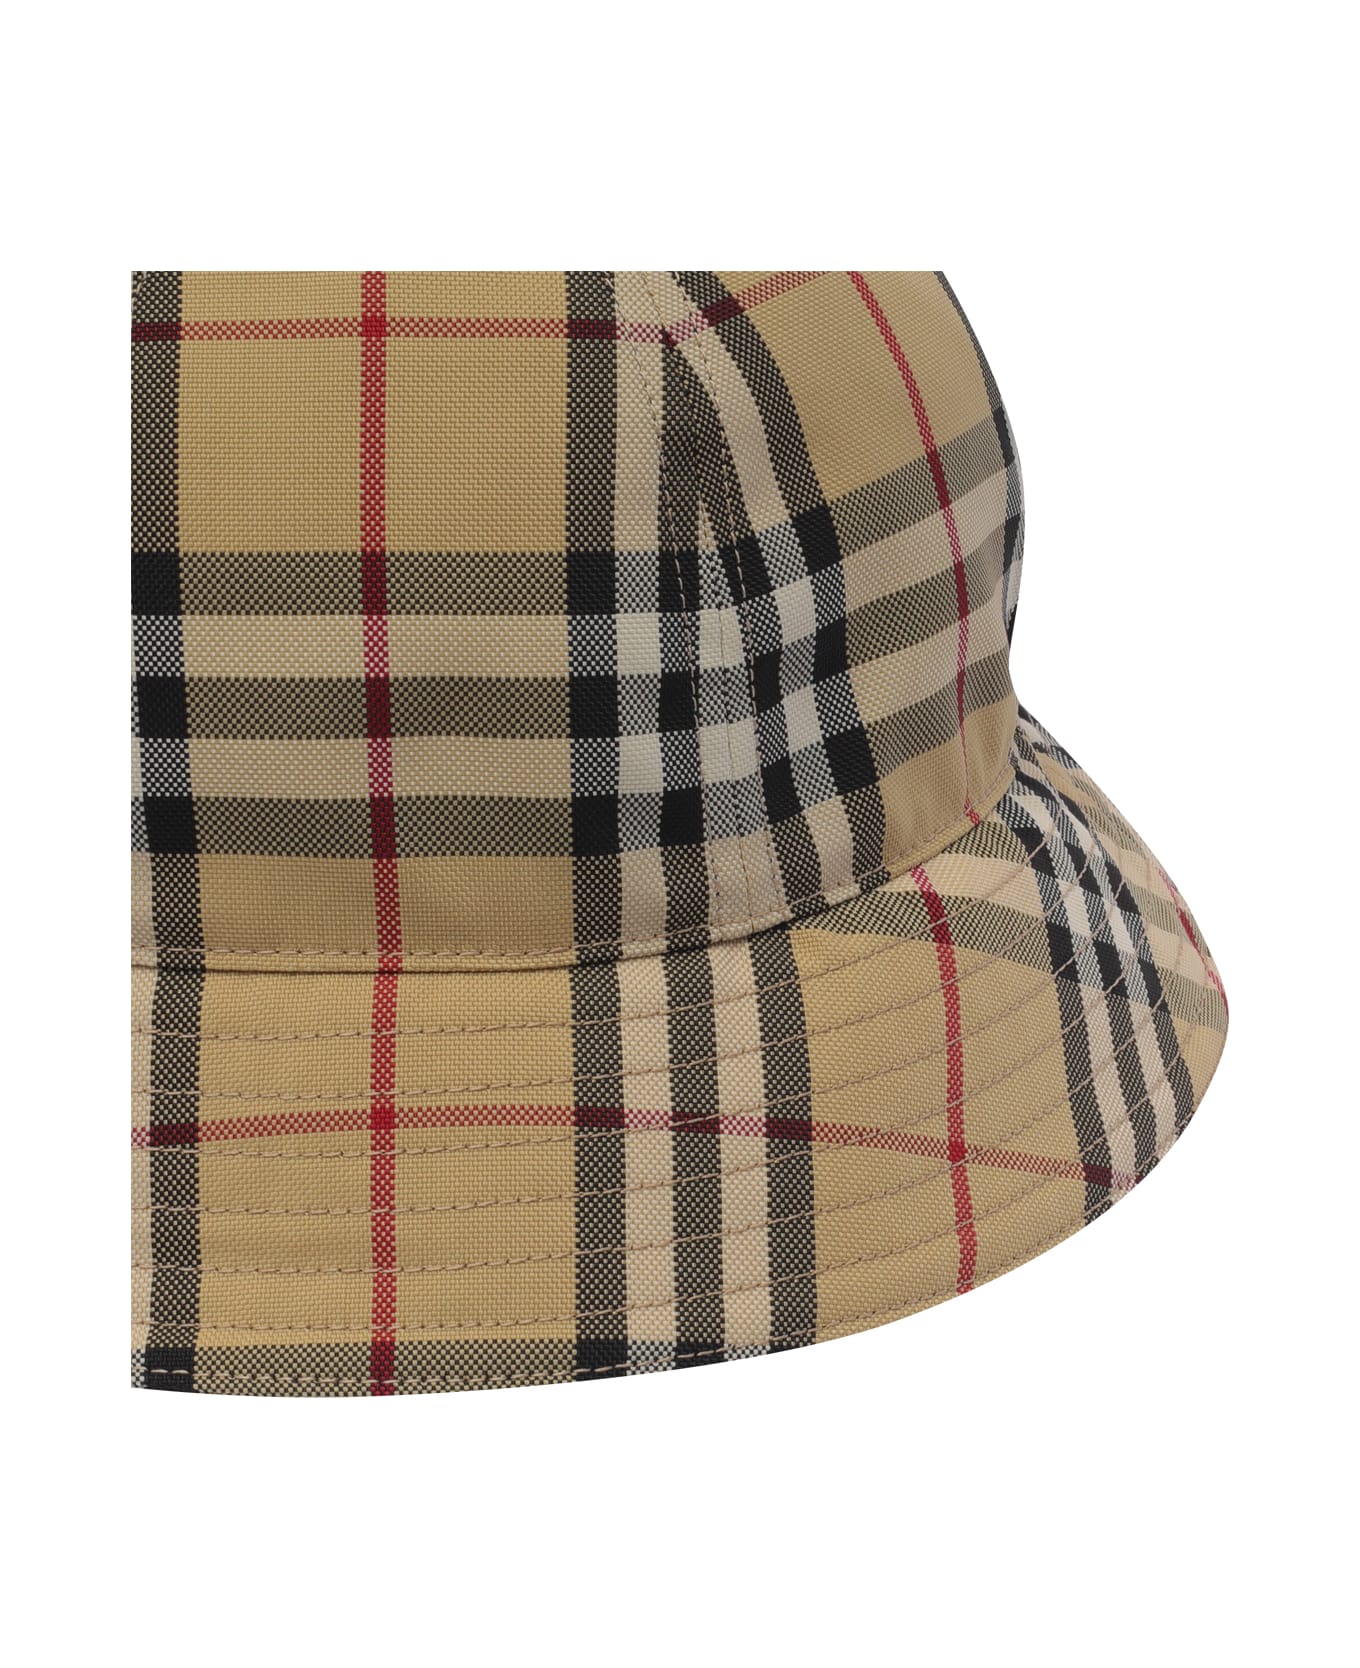 Burberry Bucket Hat In Vintage Check - Beige 帽子